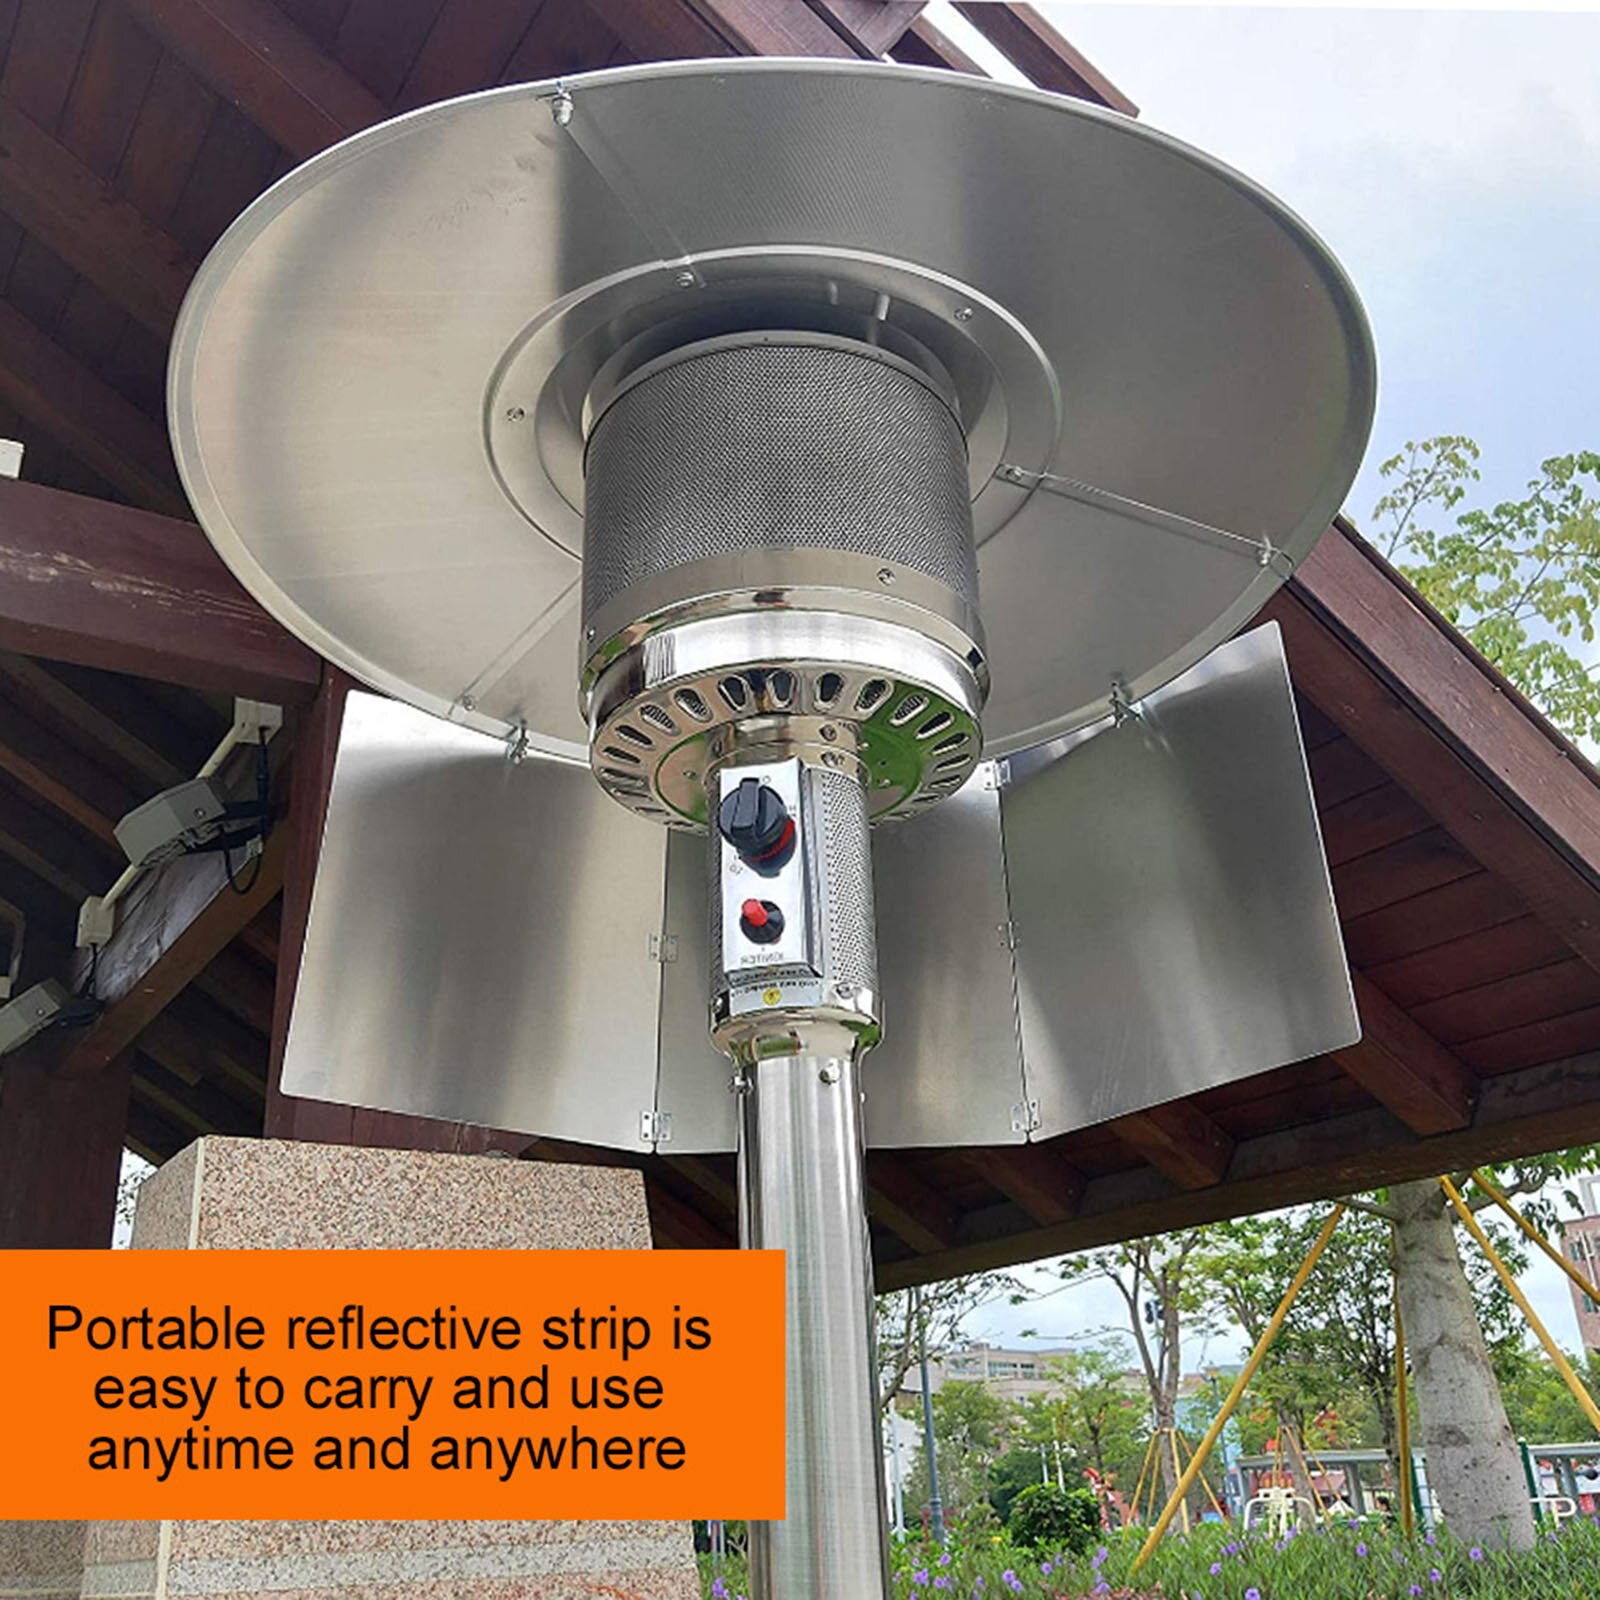 Terrassevarmer gårdsplads reflektor skjold udendørs varmeapparater til terrassepropan og naturgas gårdvarmer reflektor